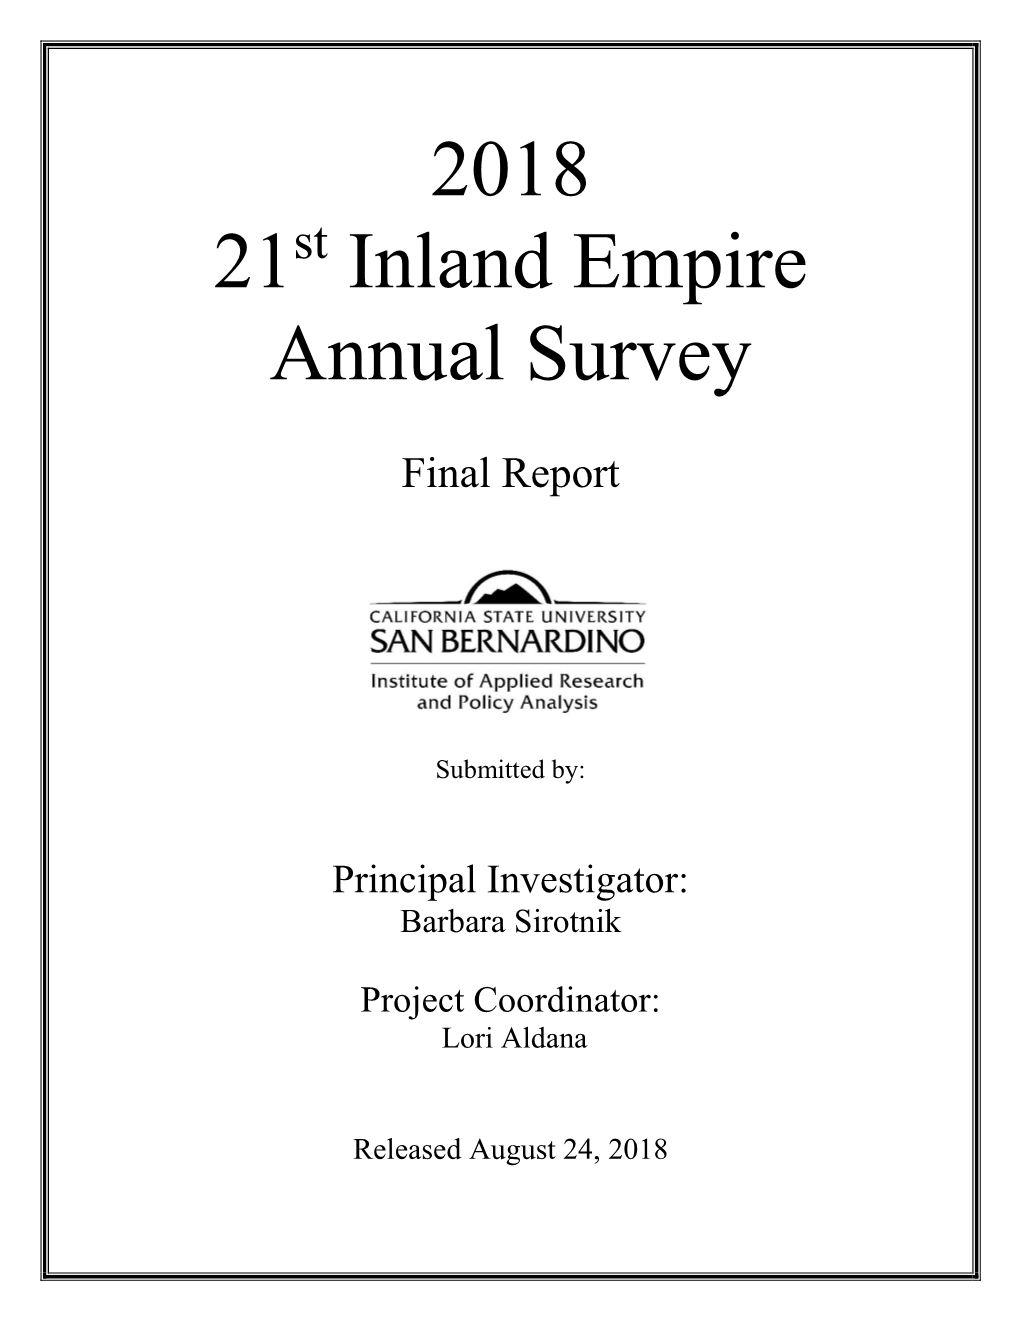 2018 Inland Empire Annual Survey